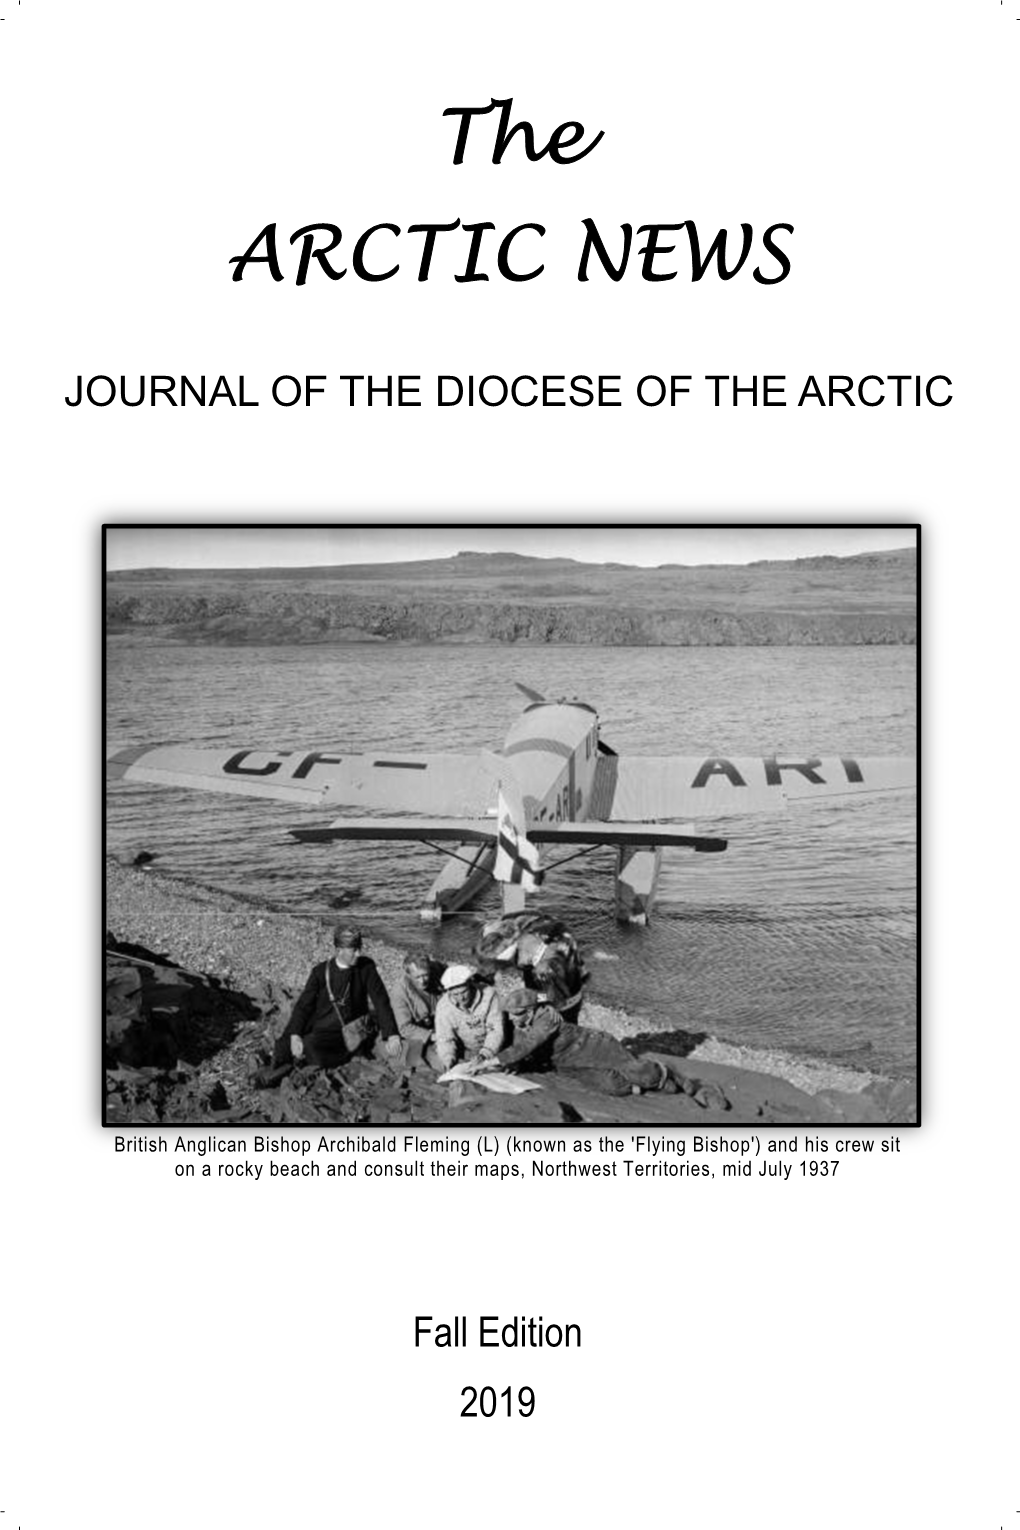 The ARCTIC NEWS